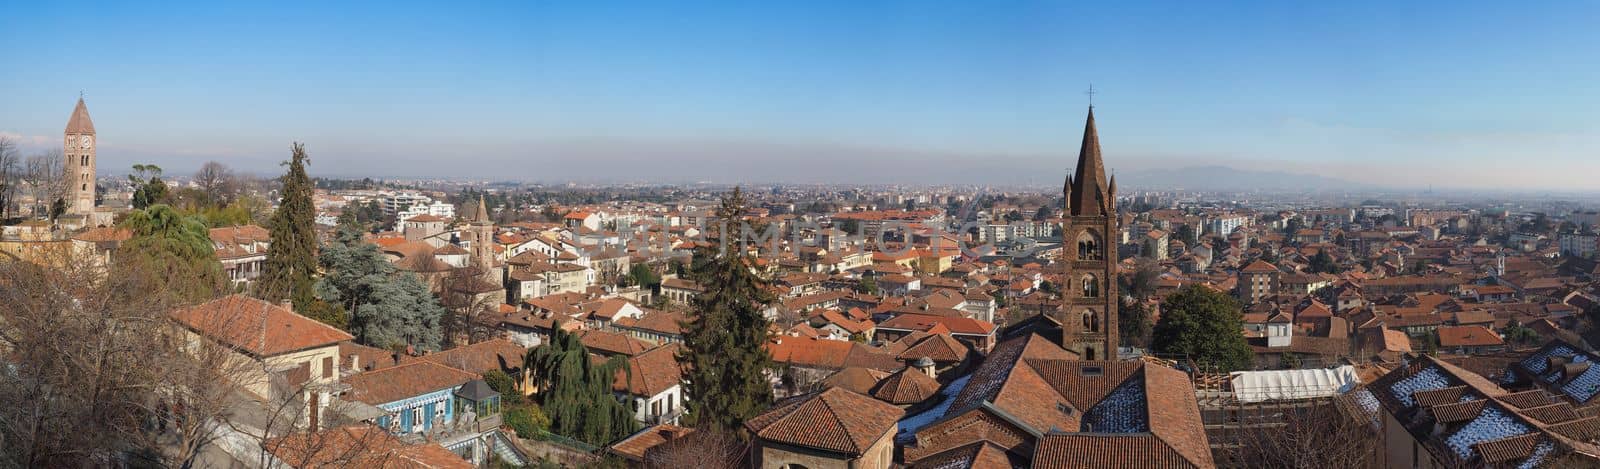 Aerial view of the city of Rivoli, Italy